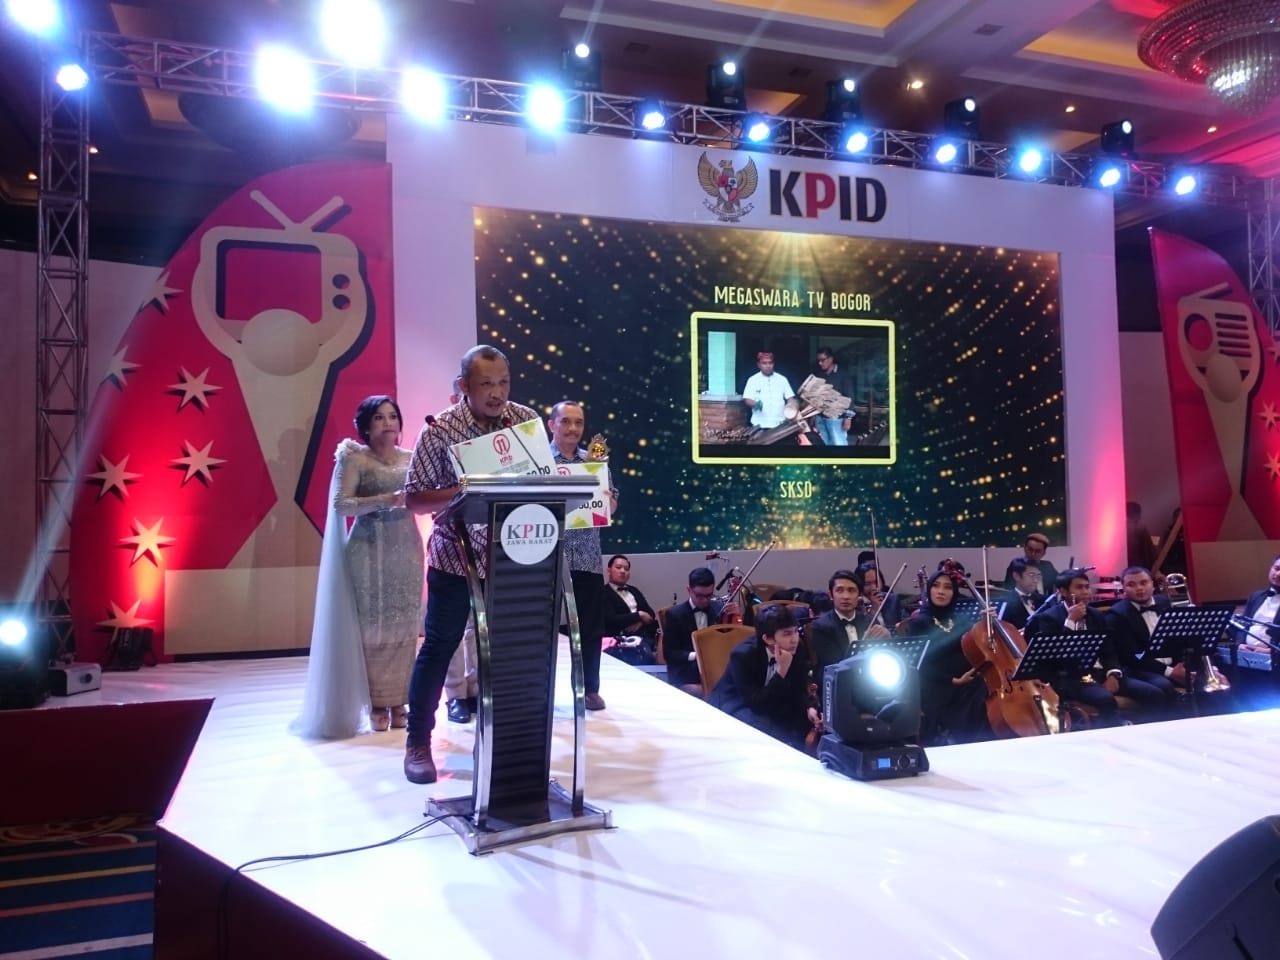 Selamat! Megaswara TV Bogor Raih Program Talkshow Terbaik di KPID Award